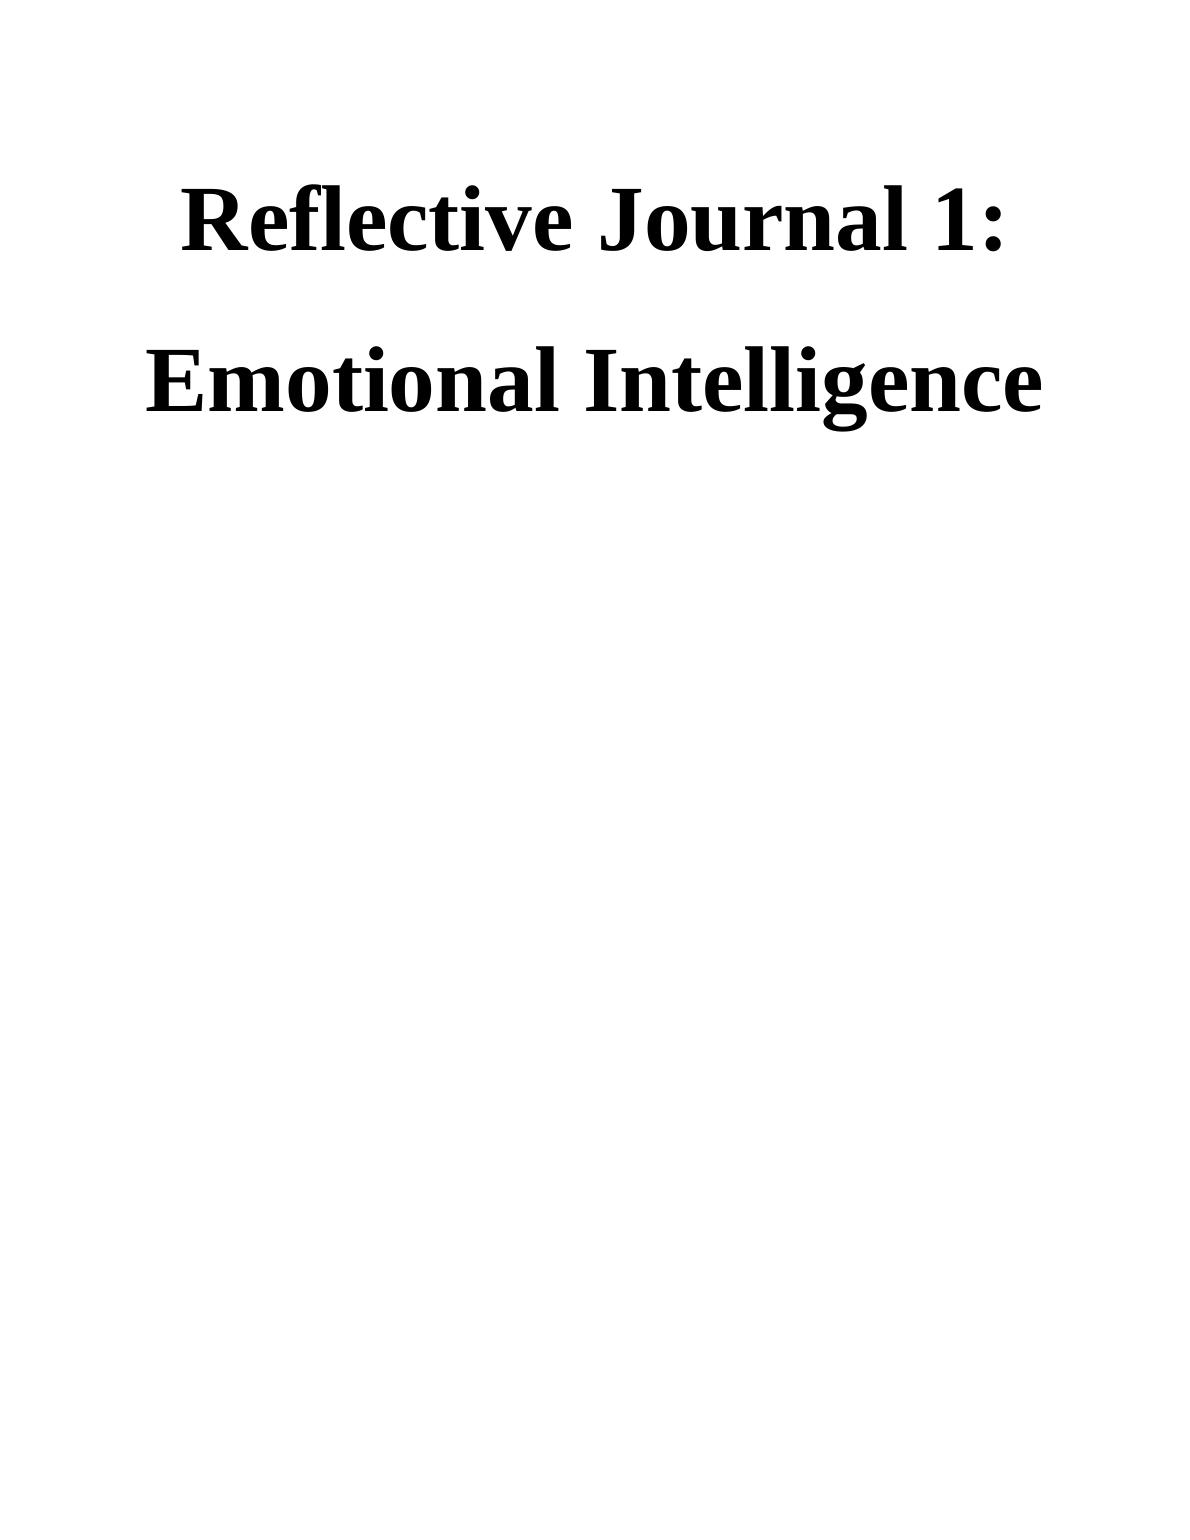 Reflective Journal on Emotional Intelligence_1